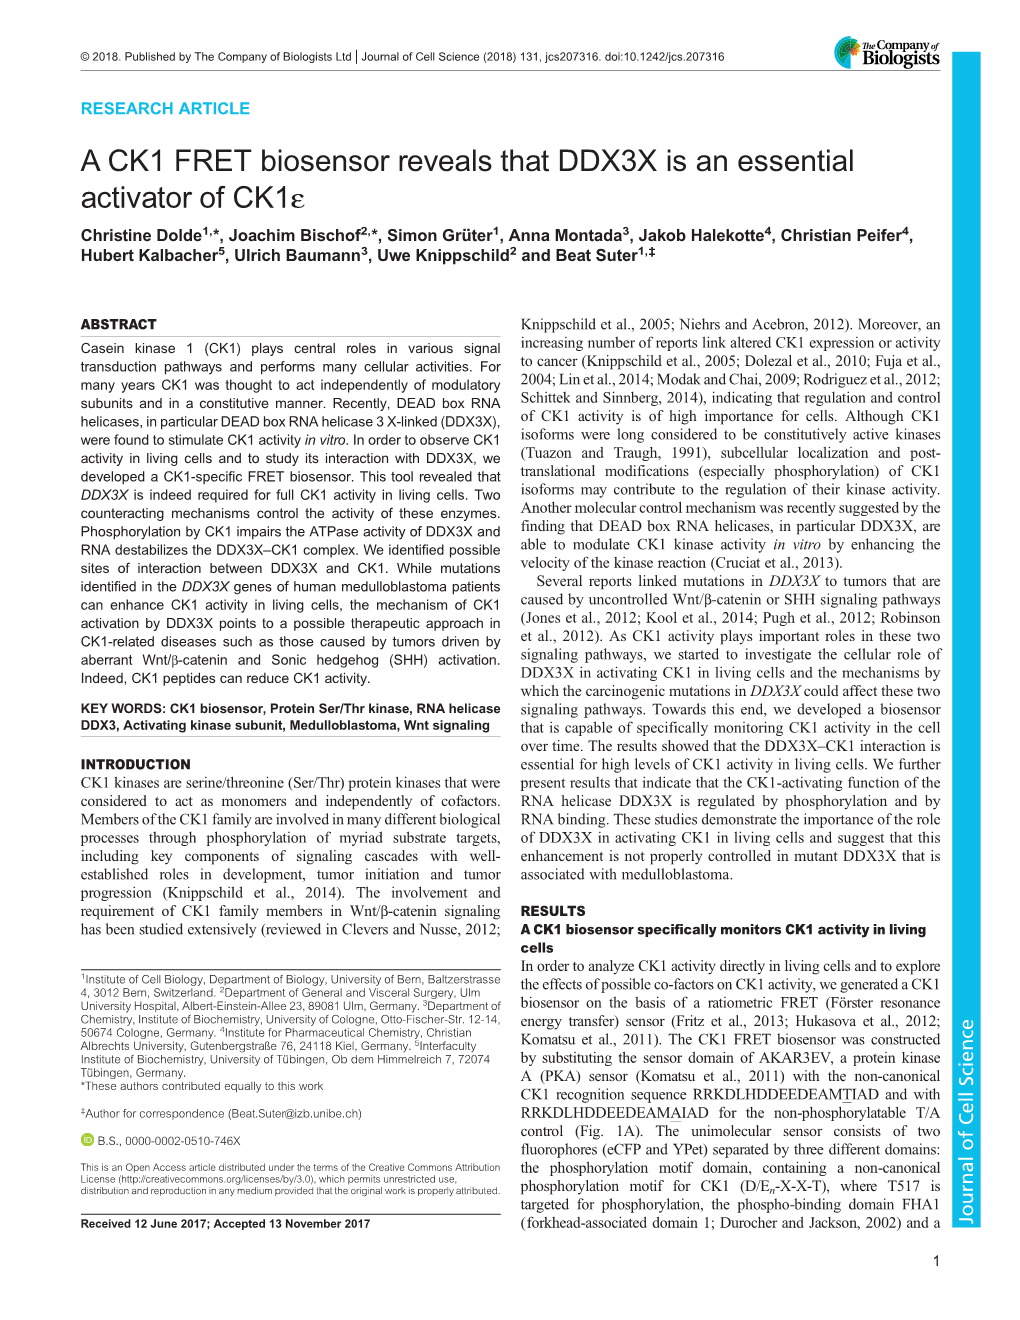 A CK1 FRET Biosensor Reveals That DDX3X Is an Essential Activator of Ck1ε